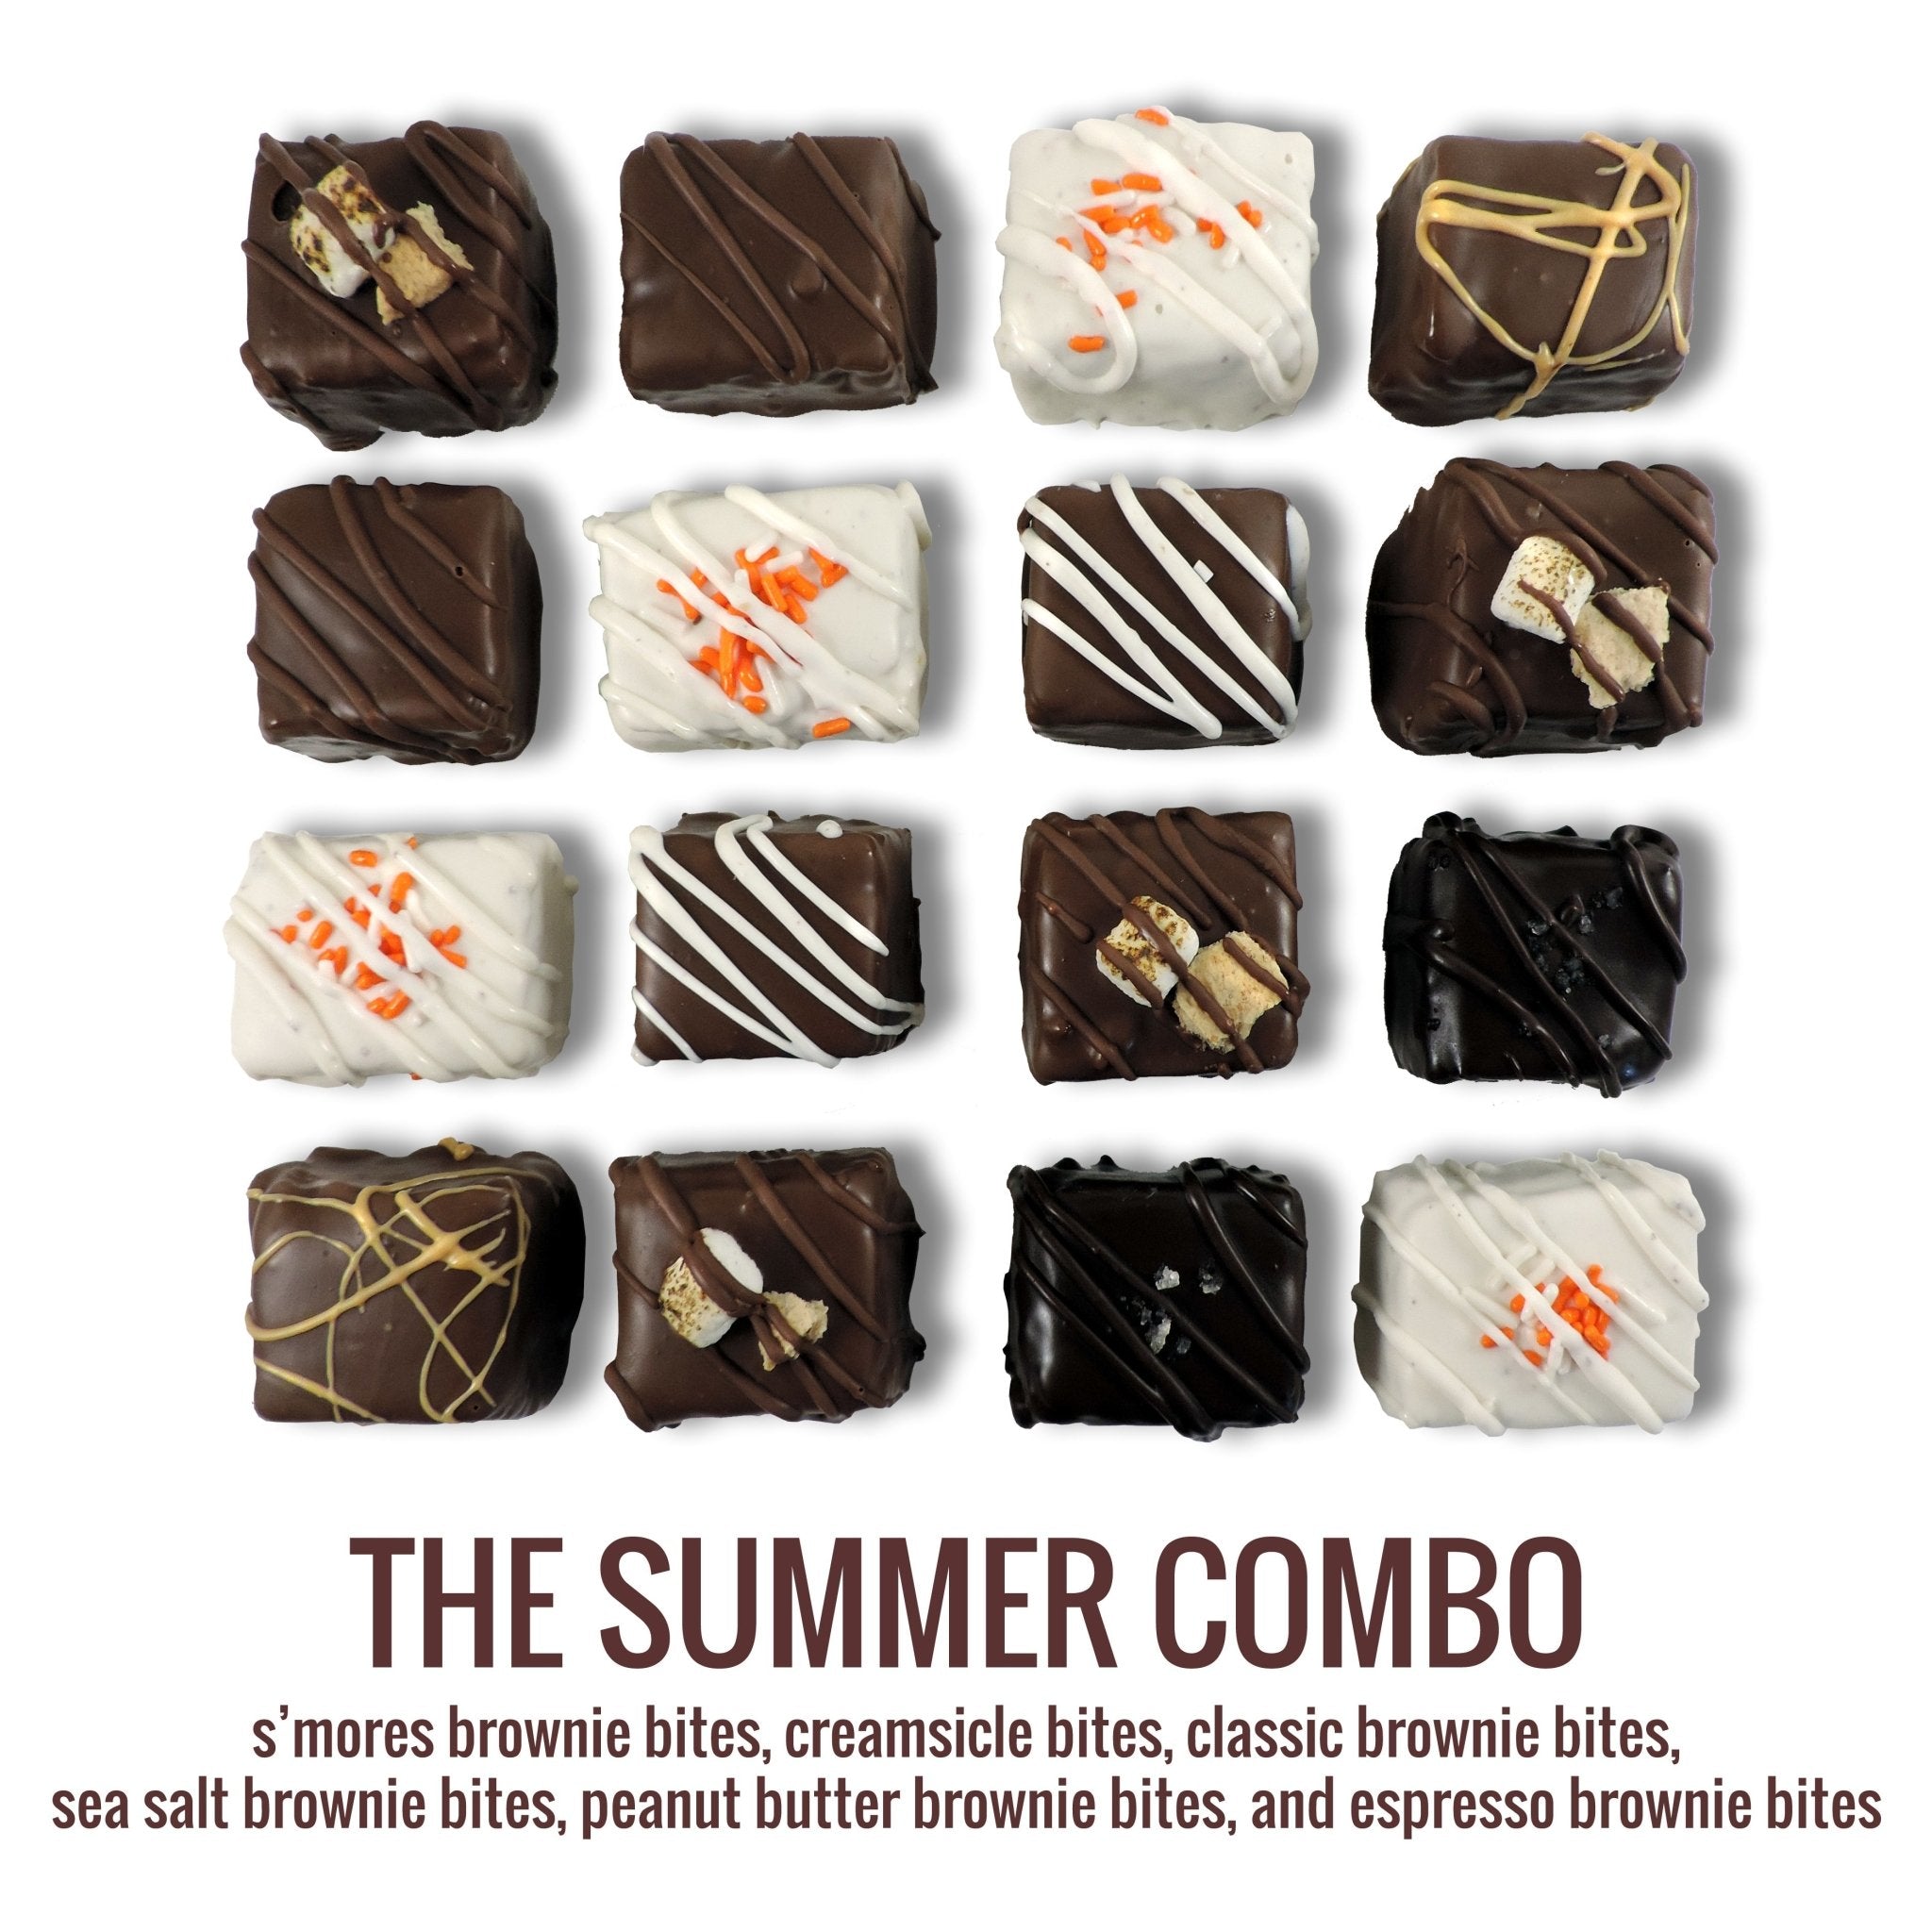 The Summer Assortment - 16 - Nettie's Craft Brownies